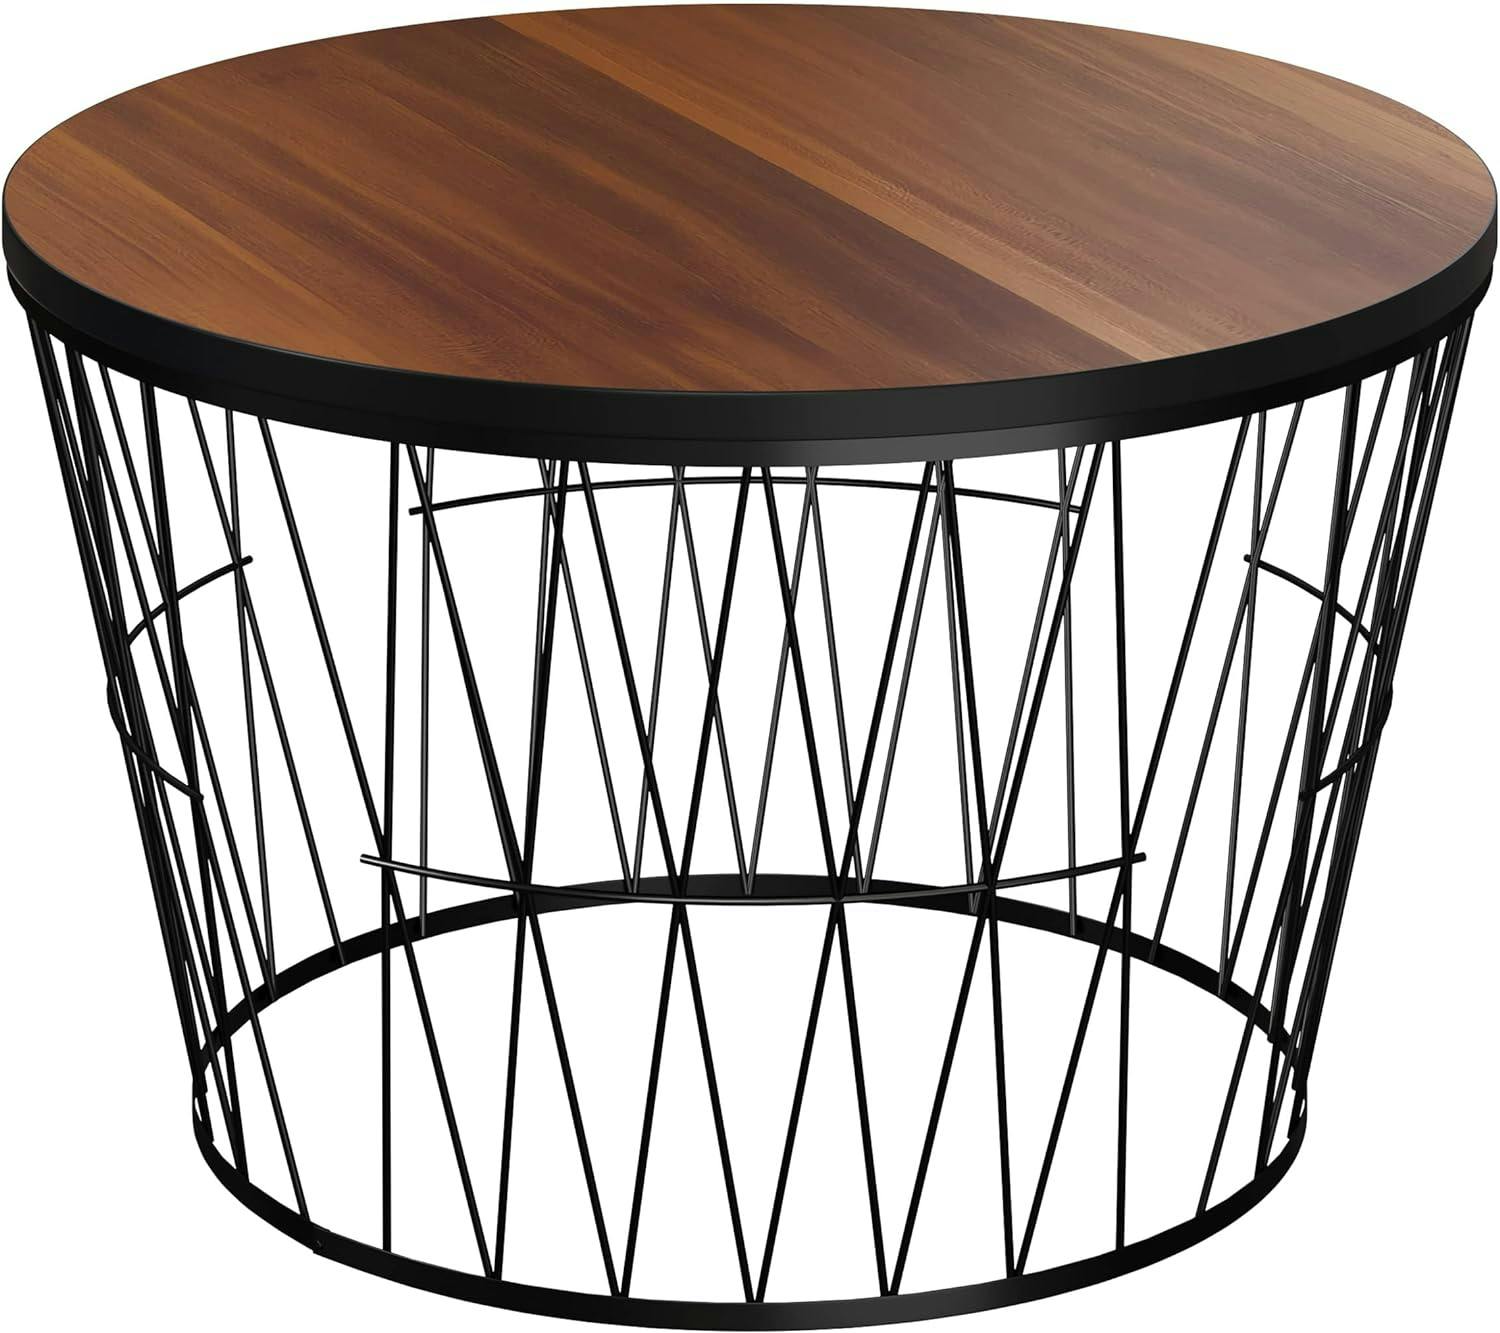 Mid-Century Modern Round Walnut & Black Coffee Table with Geometric Base